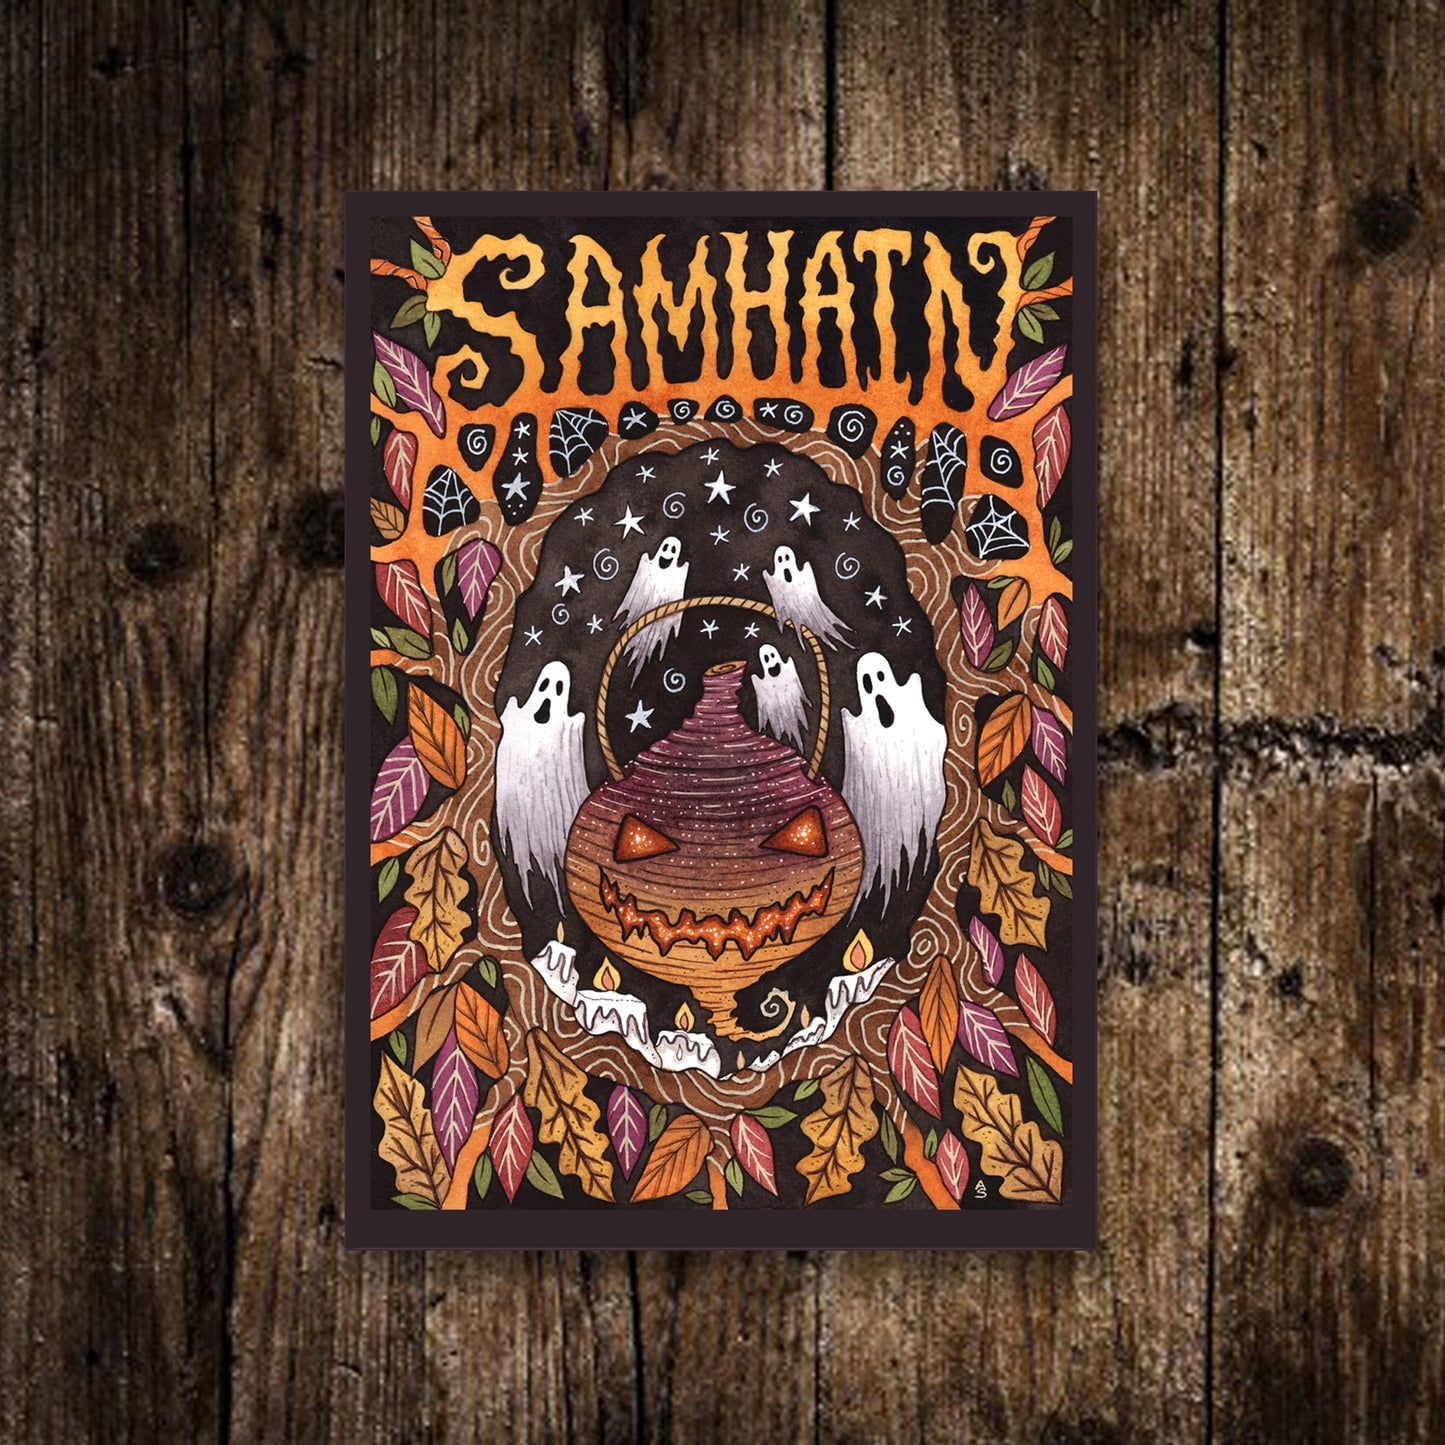 Mini Samhain Print - Small A6 Pagan Halloween Turnip Jack O Lantern Illustration - Spooky Halloween All Hallows' Eve Autumn Leaves Postcard Art